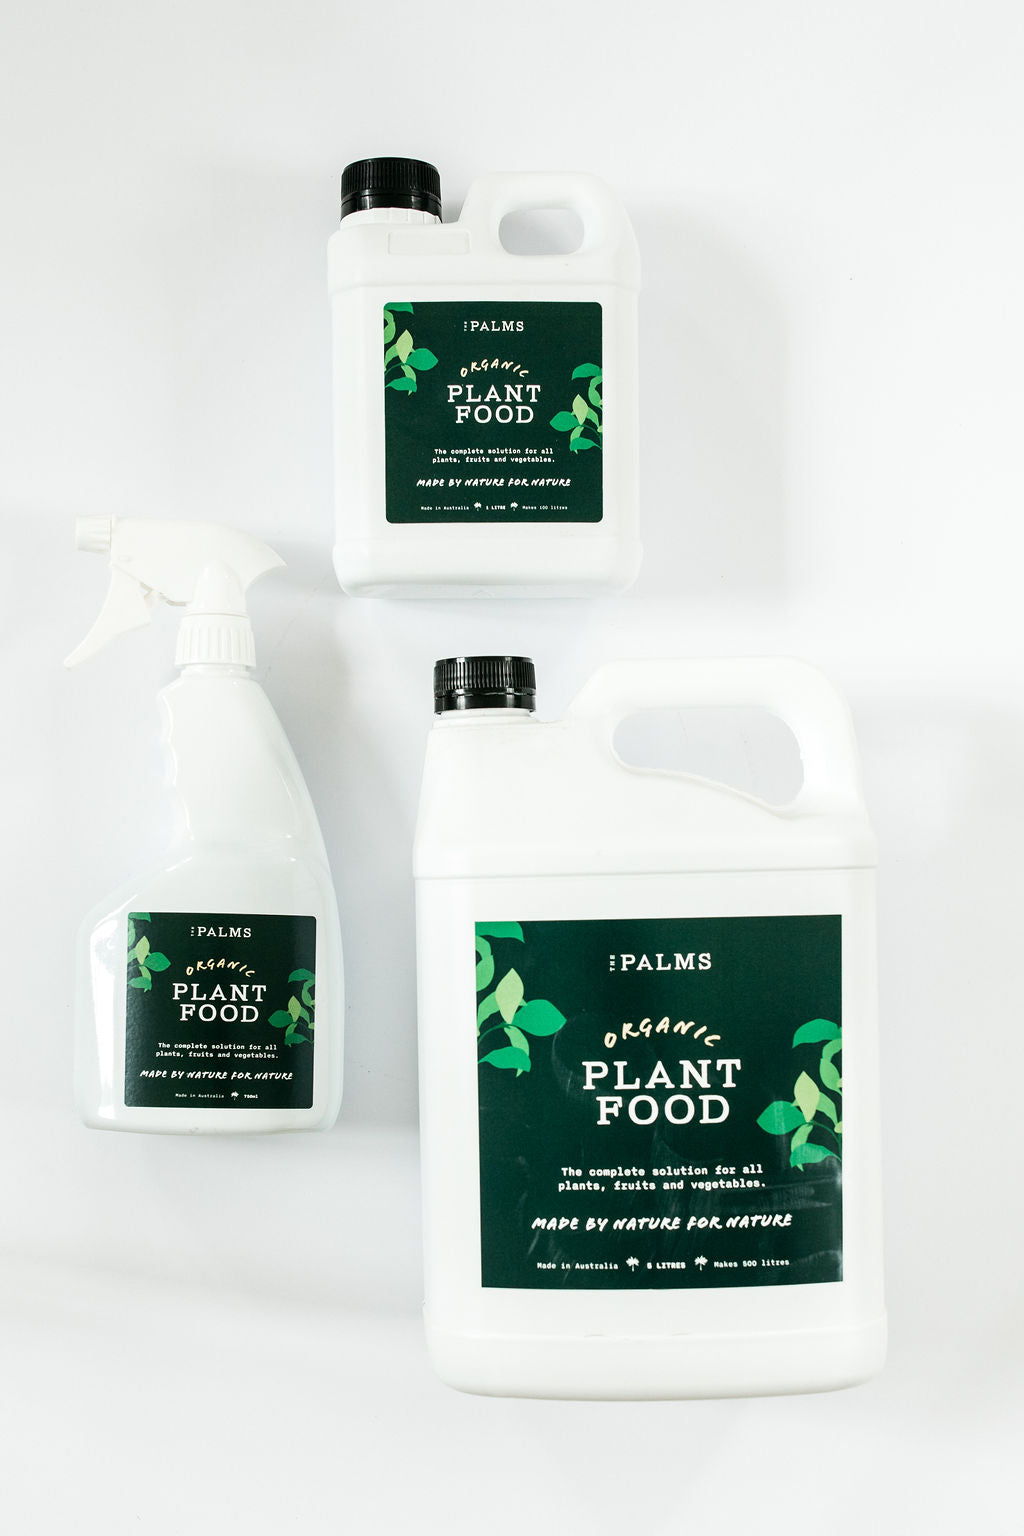 The Palms Organic Plant Food Spray